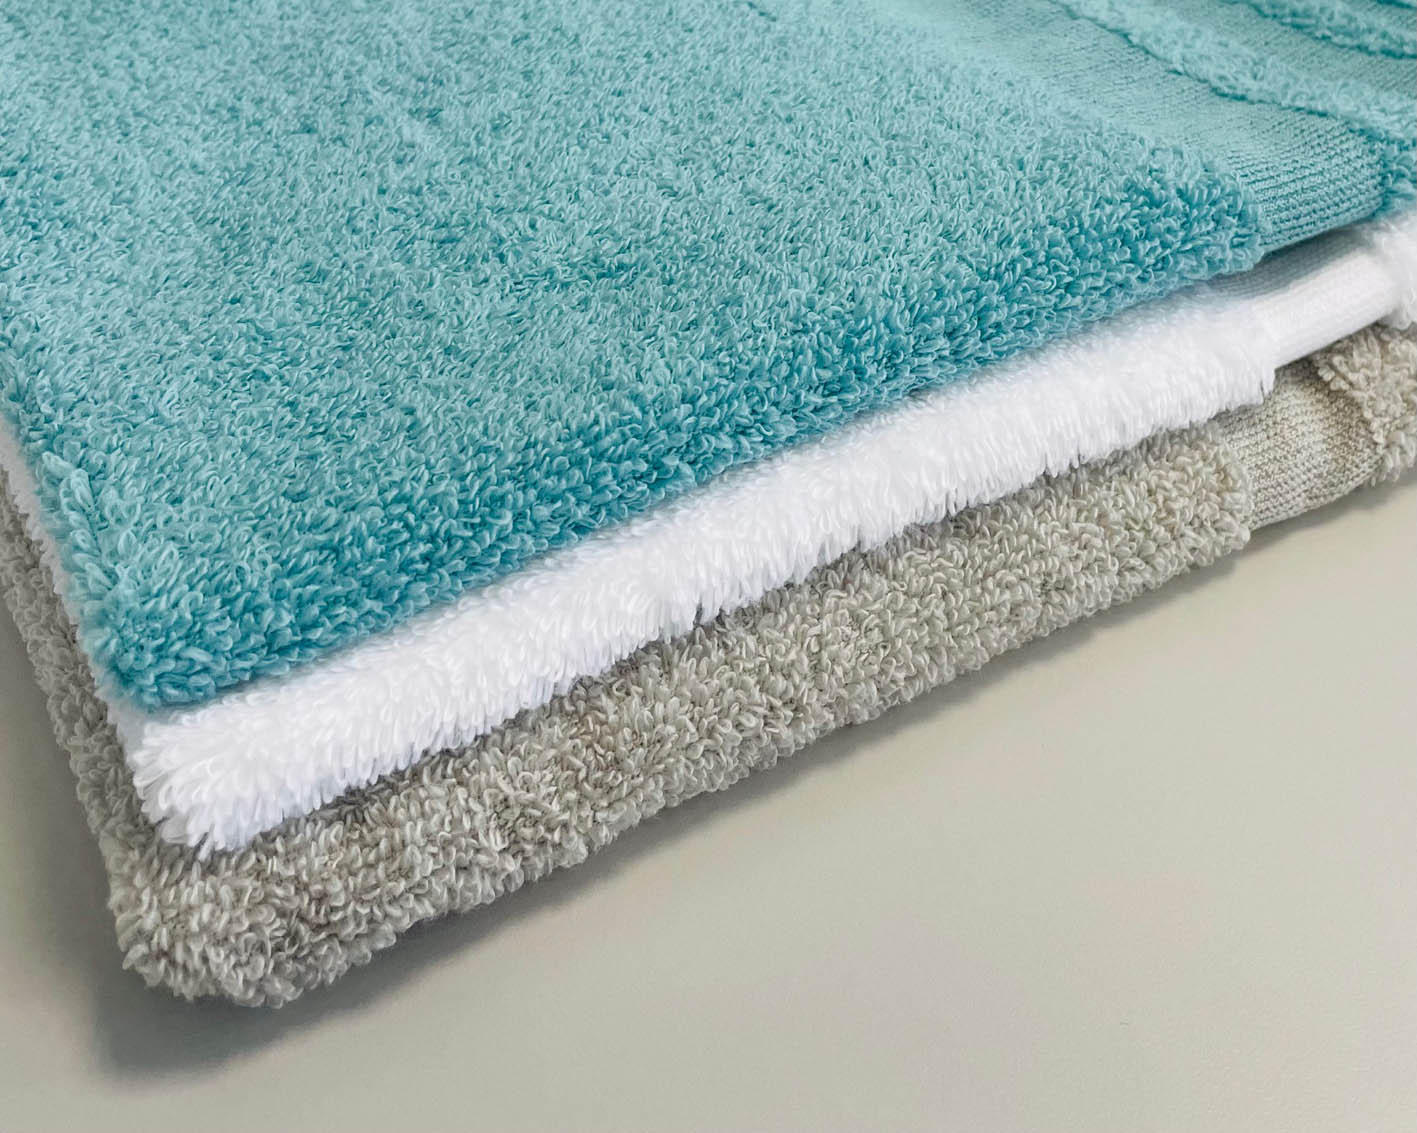 The new zero-twist towels. © Karl Mayer